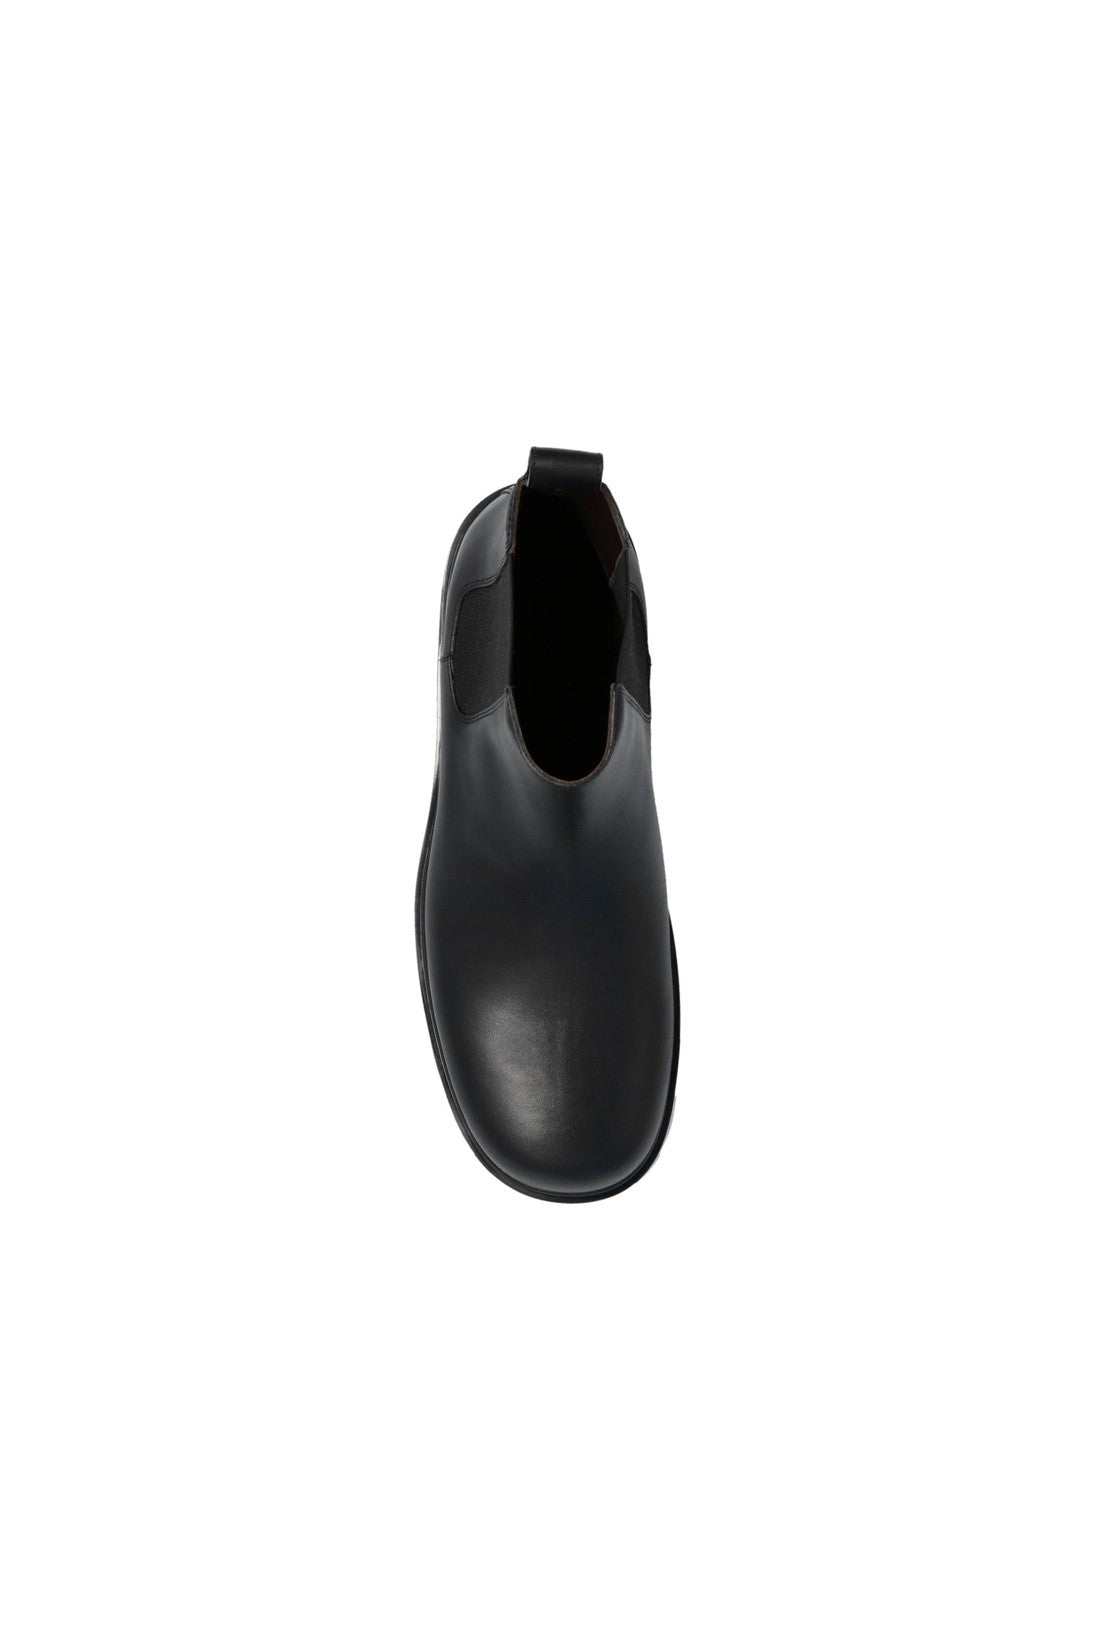 BOTTEGA VENETA-Bottega Veneta Leather Ankle Boots-MEN SHOES-Outlet-Sale